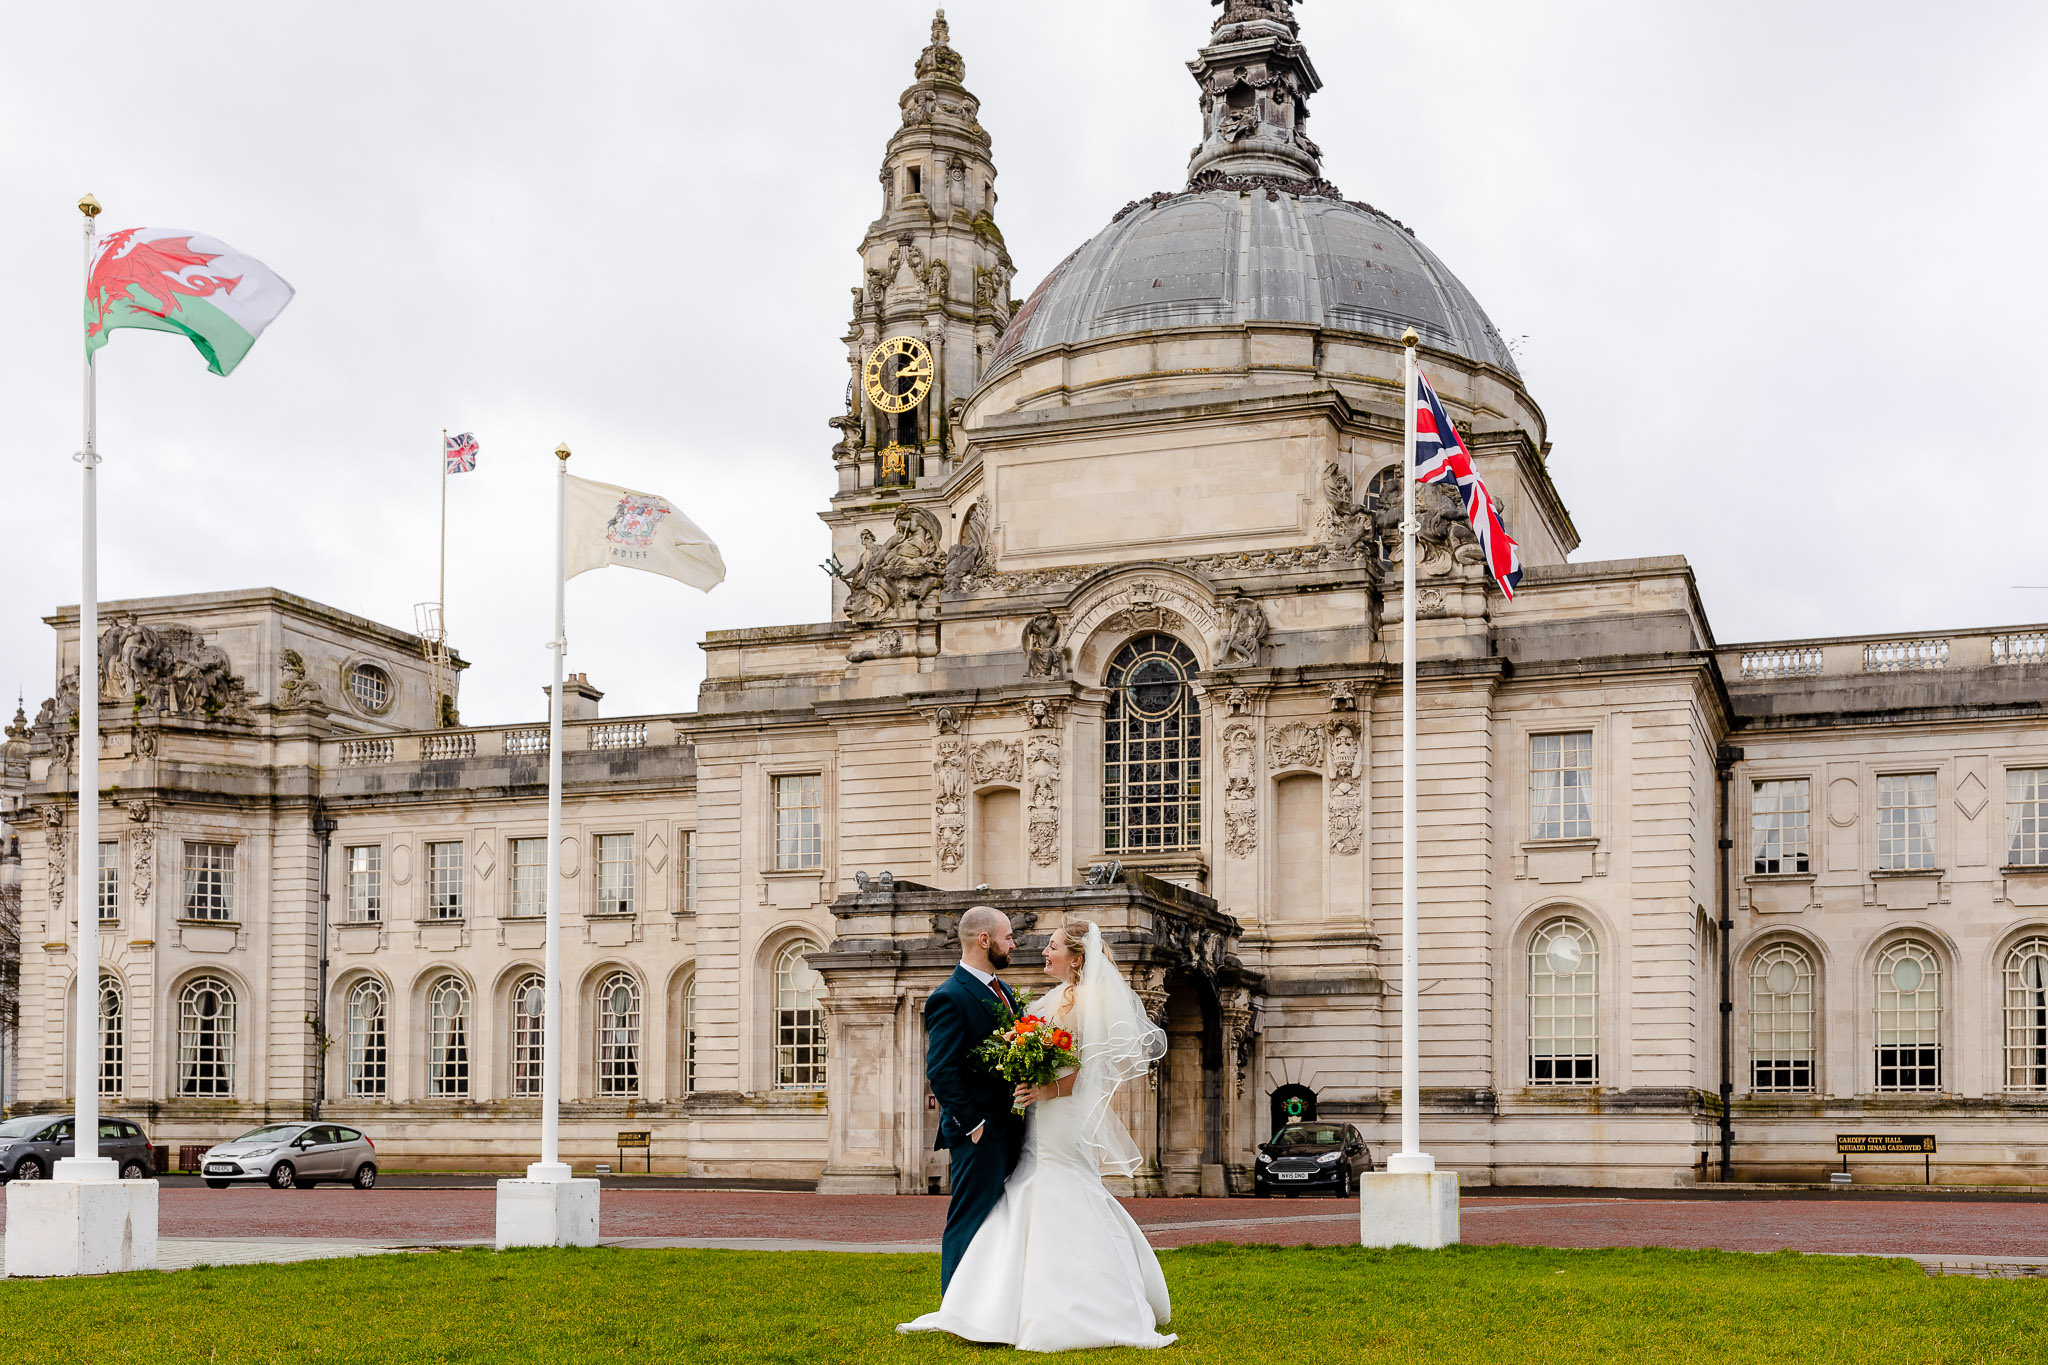 Wedding Photographer Cardiff - Cardiff City Hall Wedding Photography - Art by Design